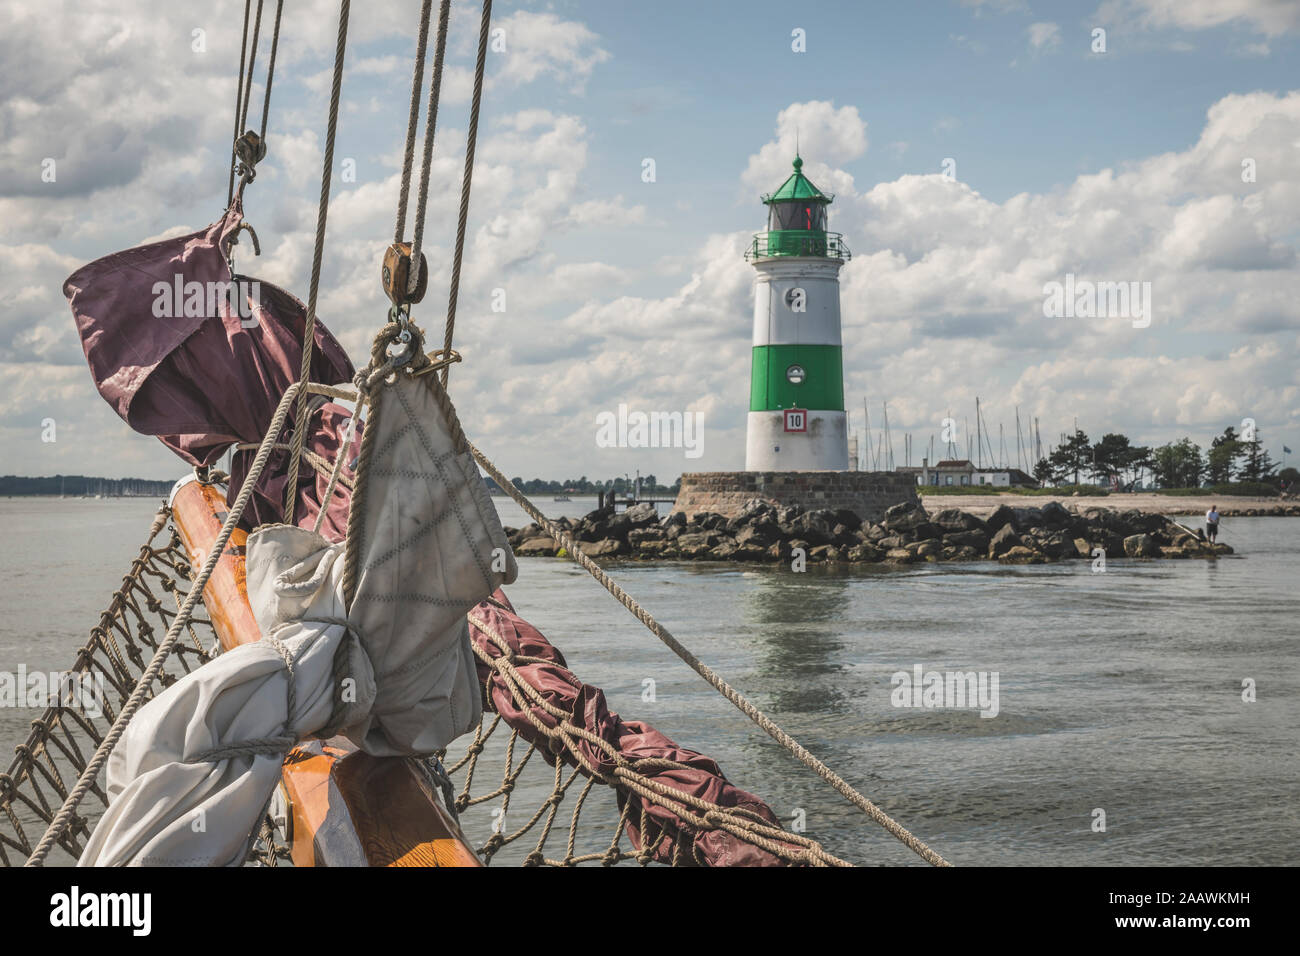 Germany, Schleswig-Holstein, Schleimunde lighthouse seen from gaff schooner boat Stock Photo